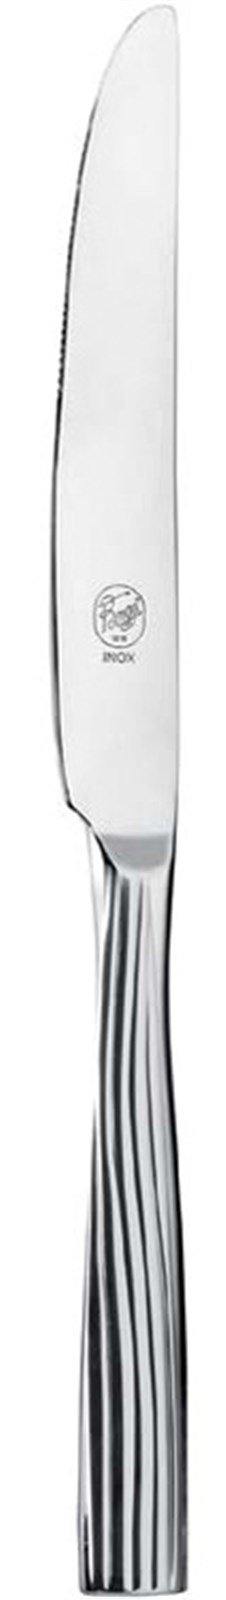 Sedona Tafelmesser 5.5mm 18/10 - MyLiving24